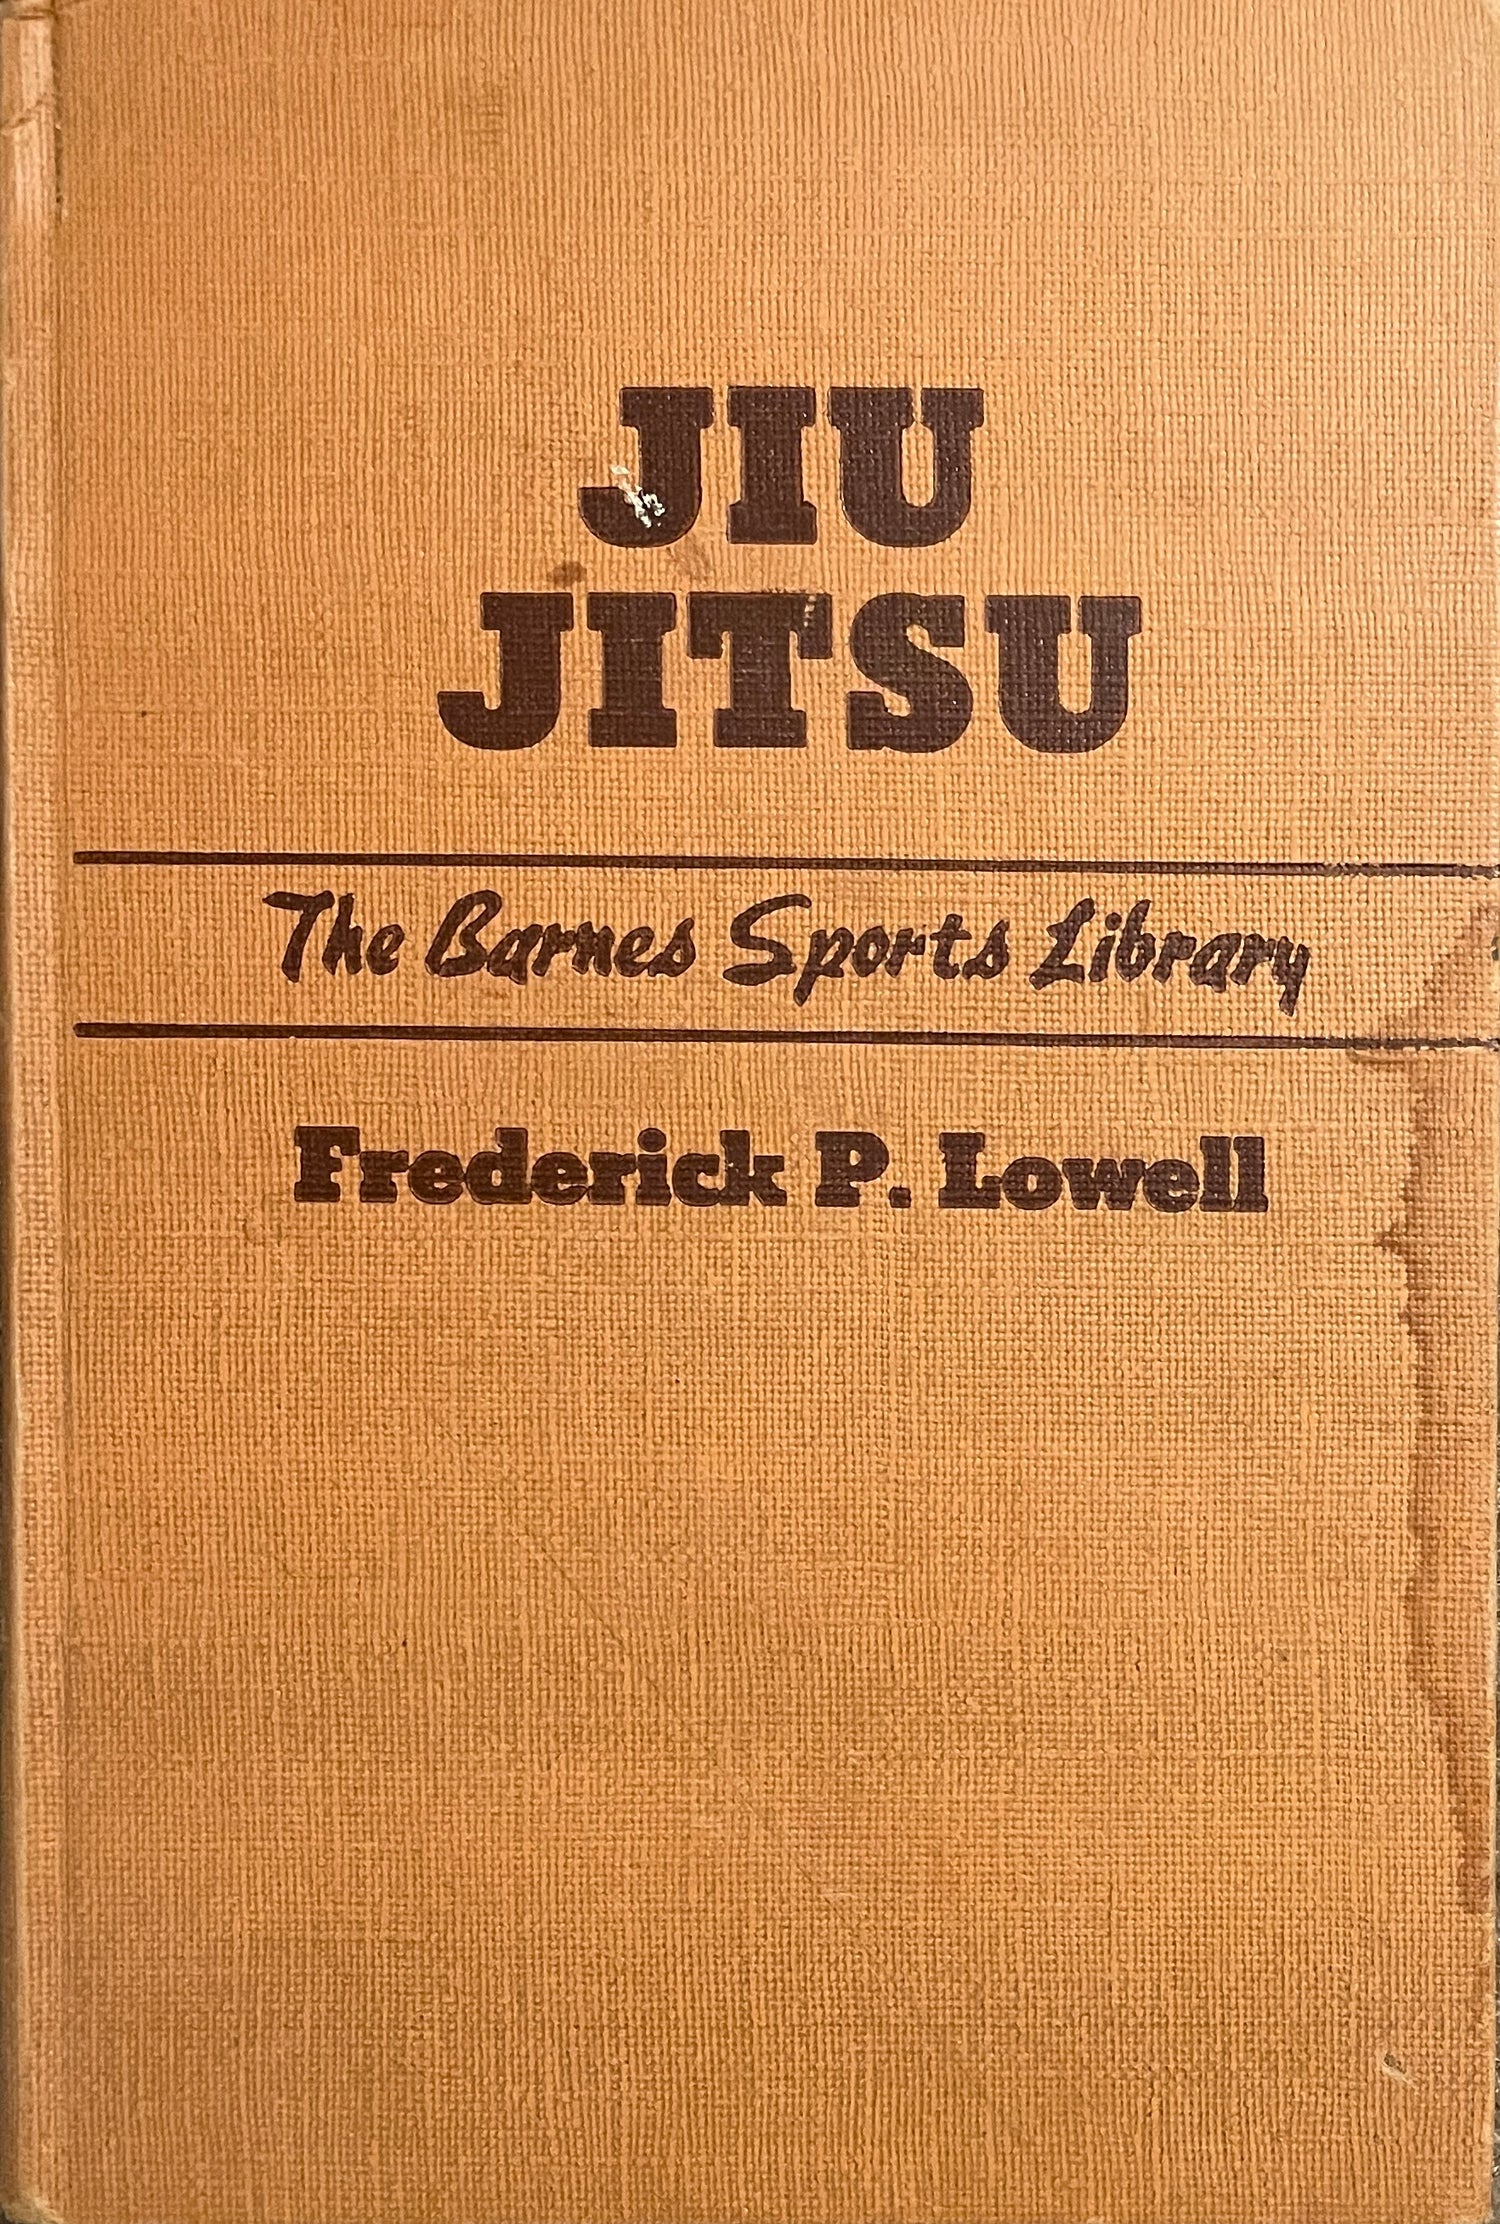 Jiu Jitsu: Barnes Sports Library Book by Frederick Lowell (Hardcover) (Preowned)